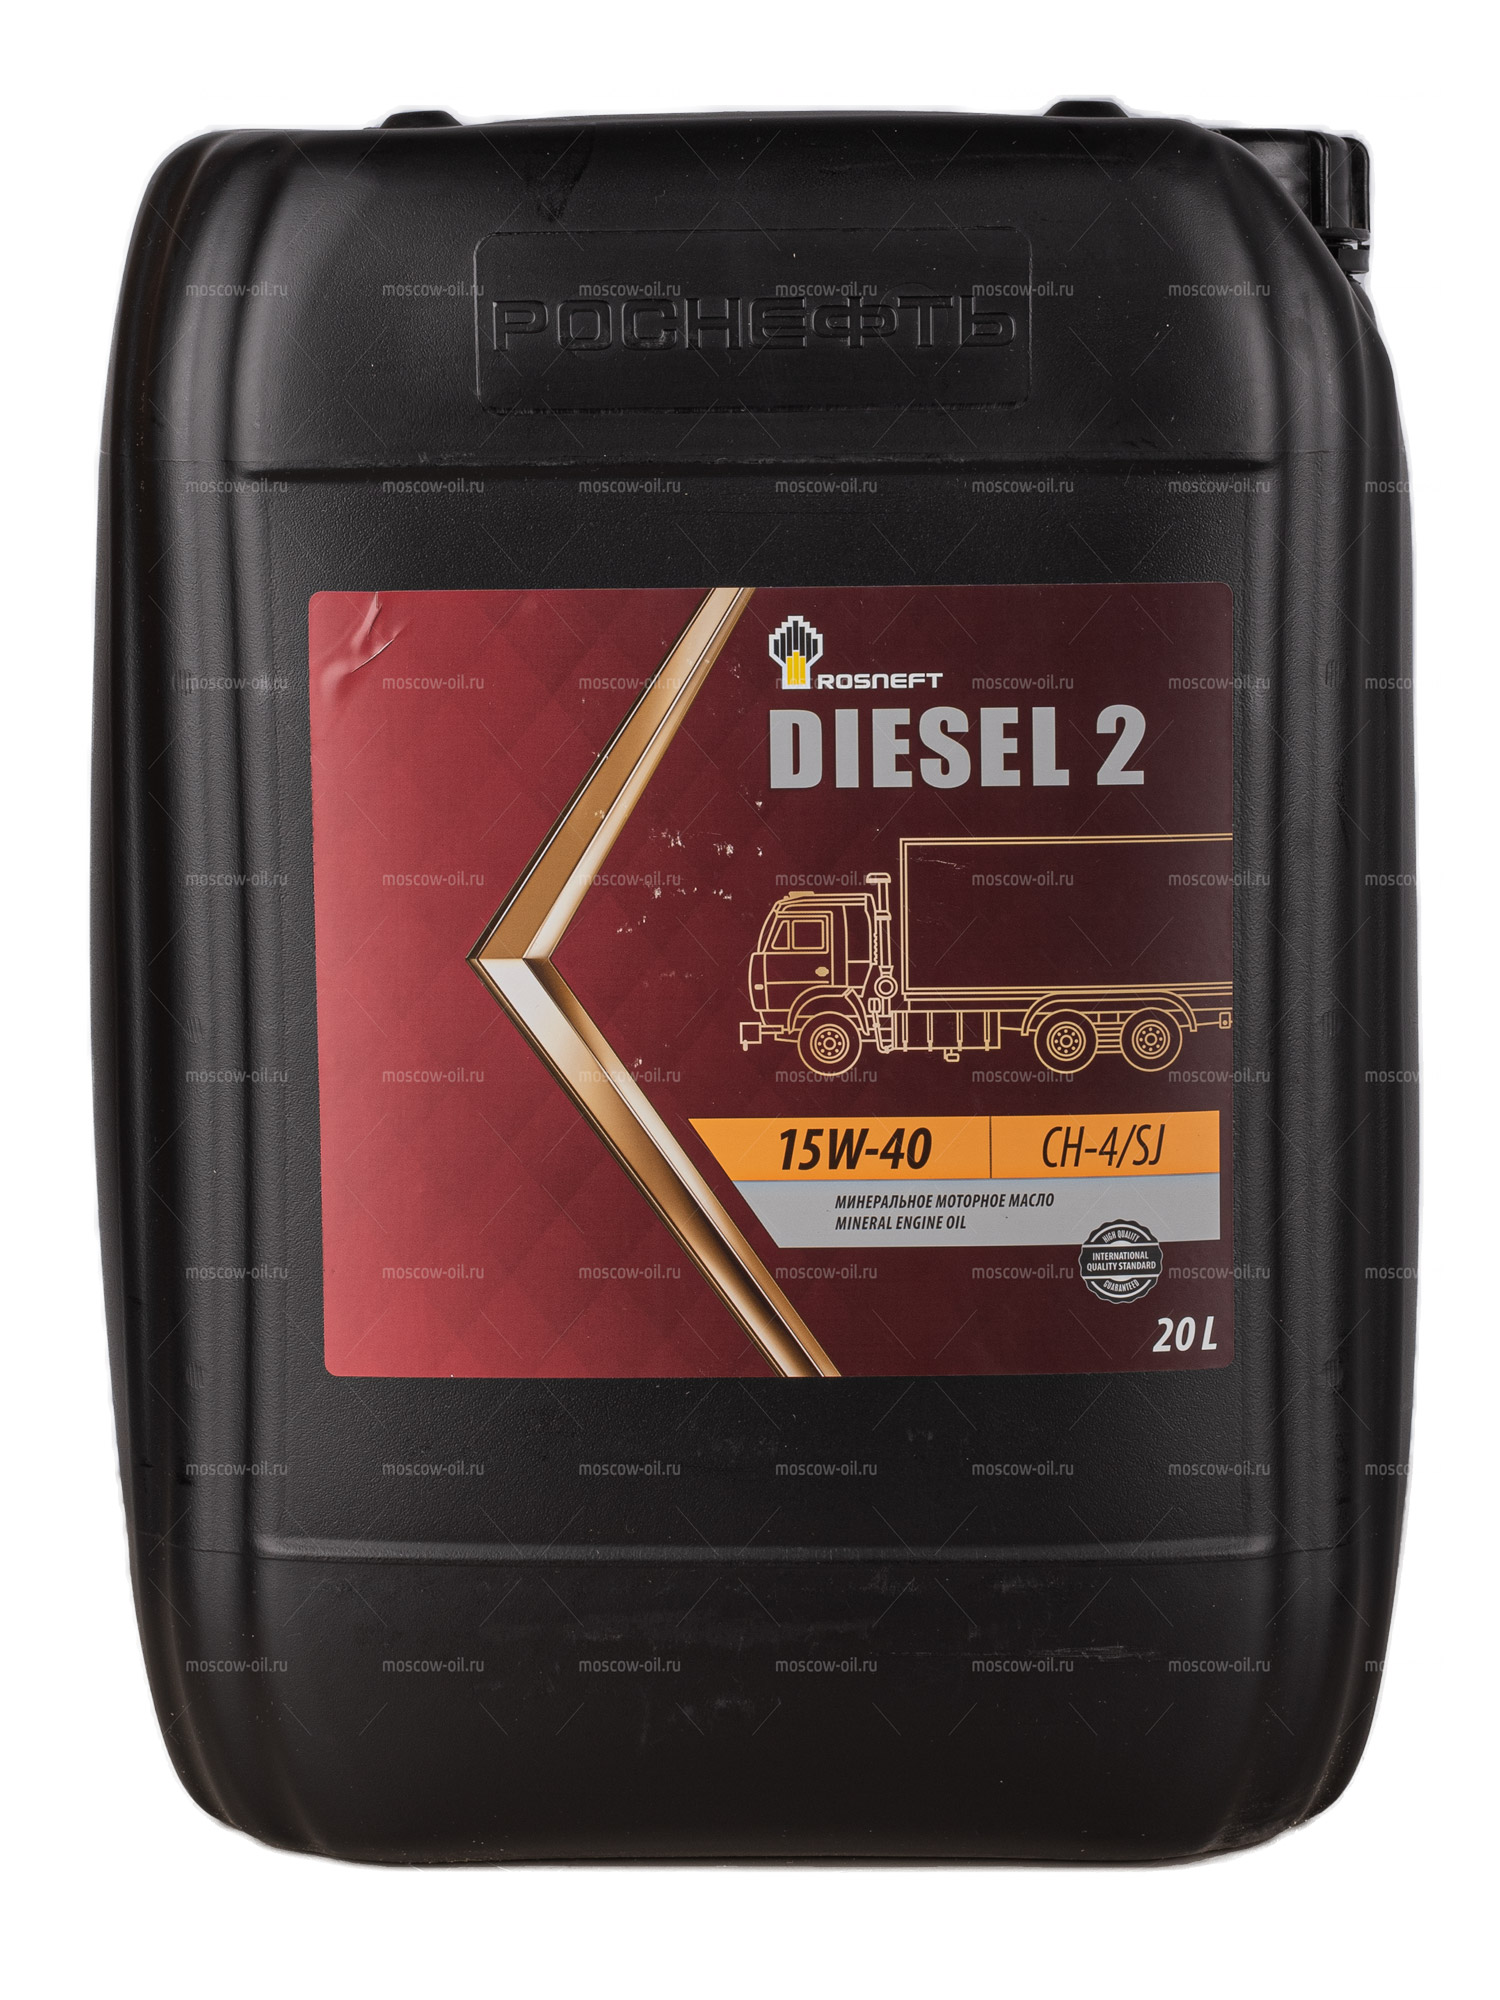 Rosneft Diesel 2 15W-40